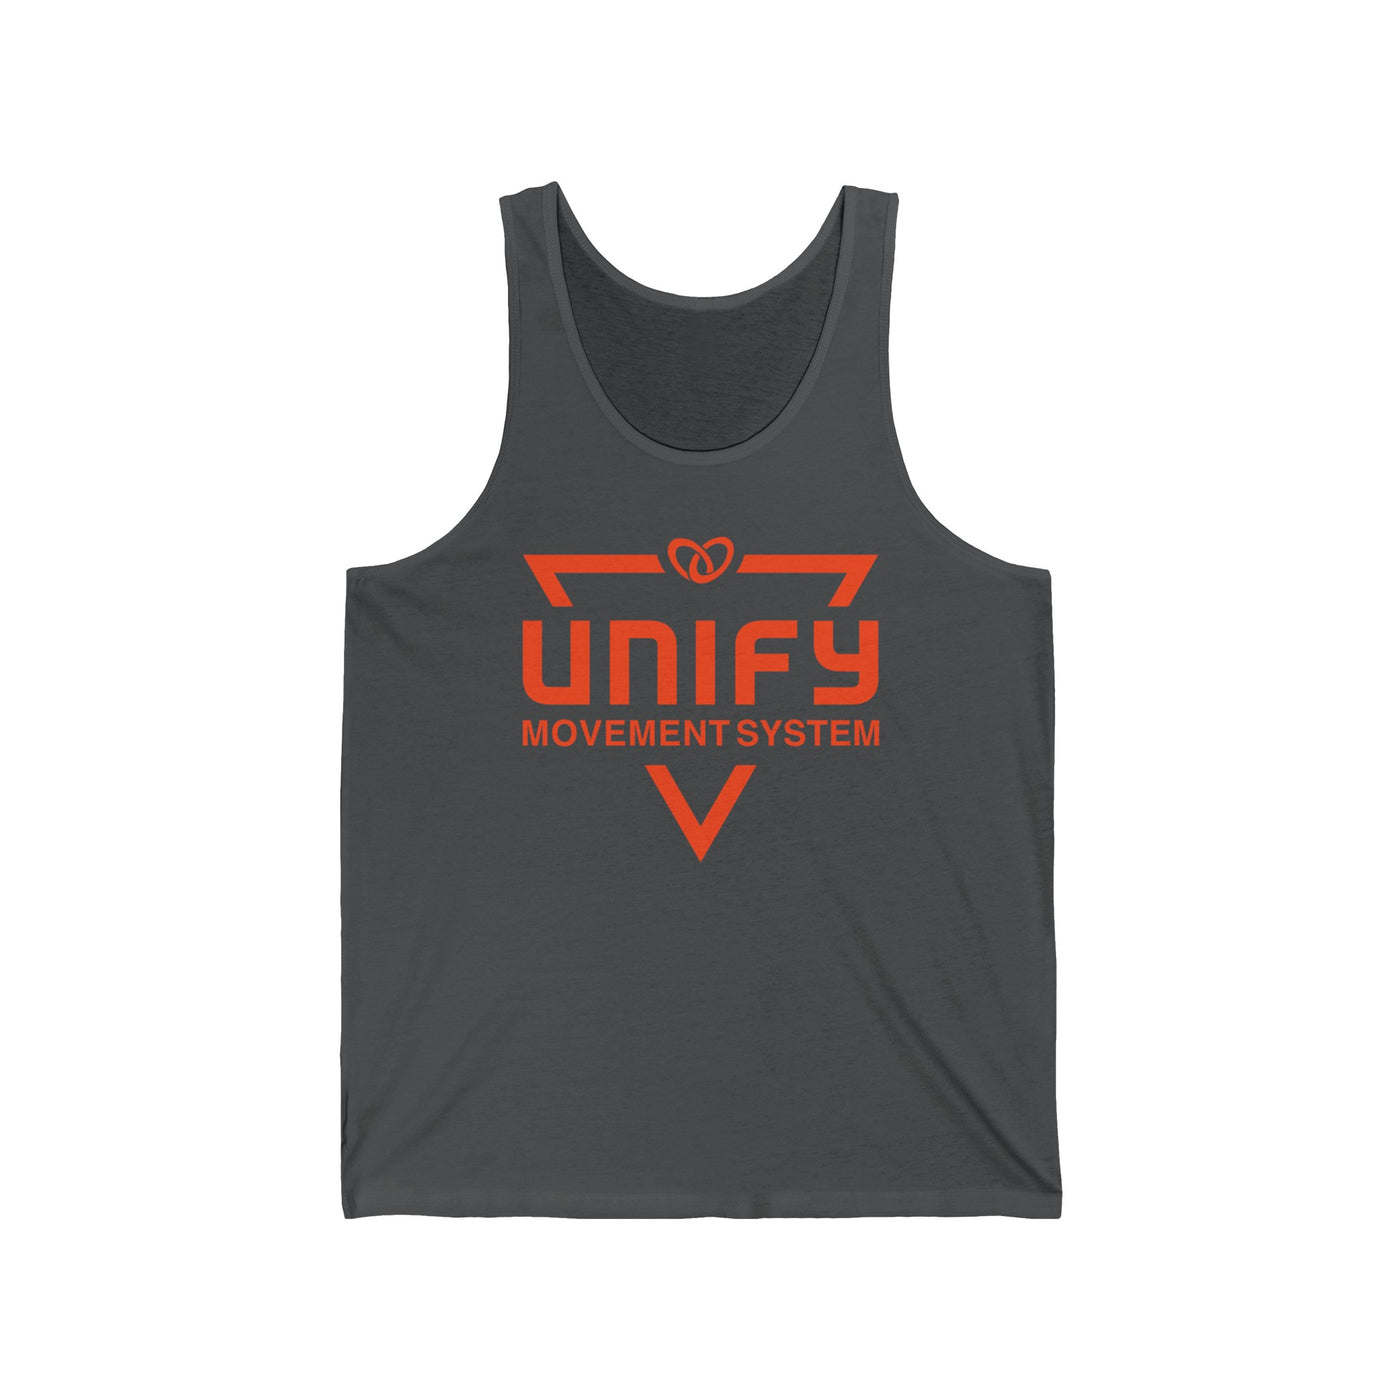 Unify Tank